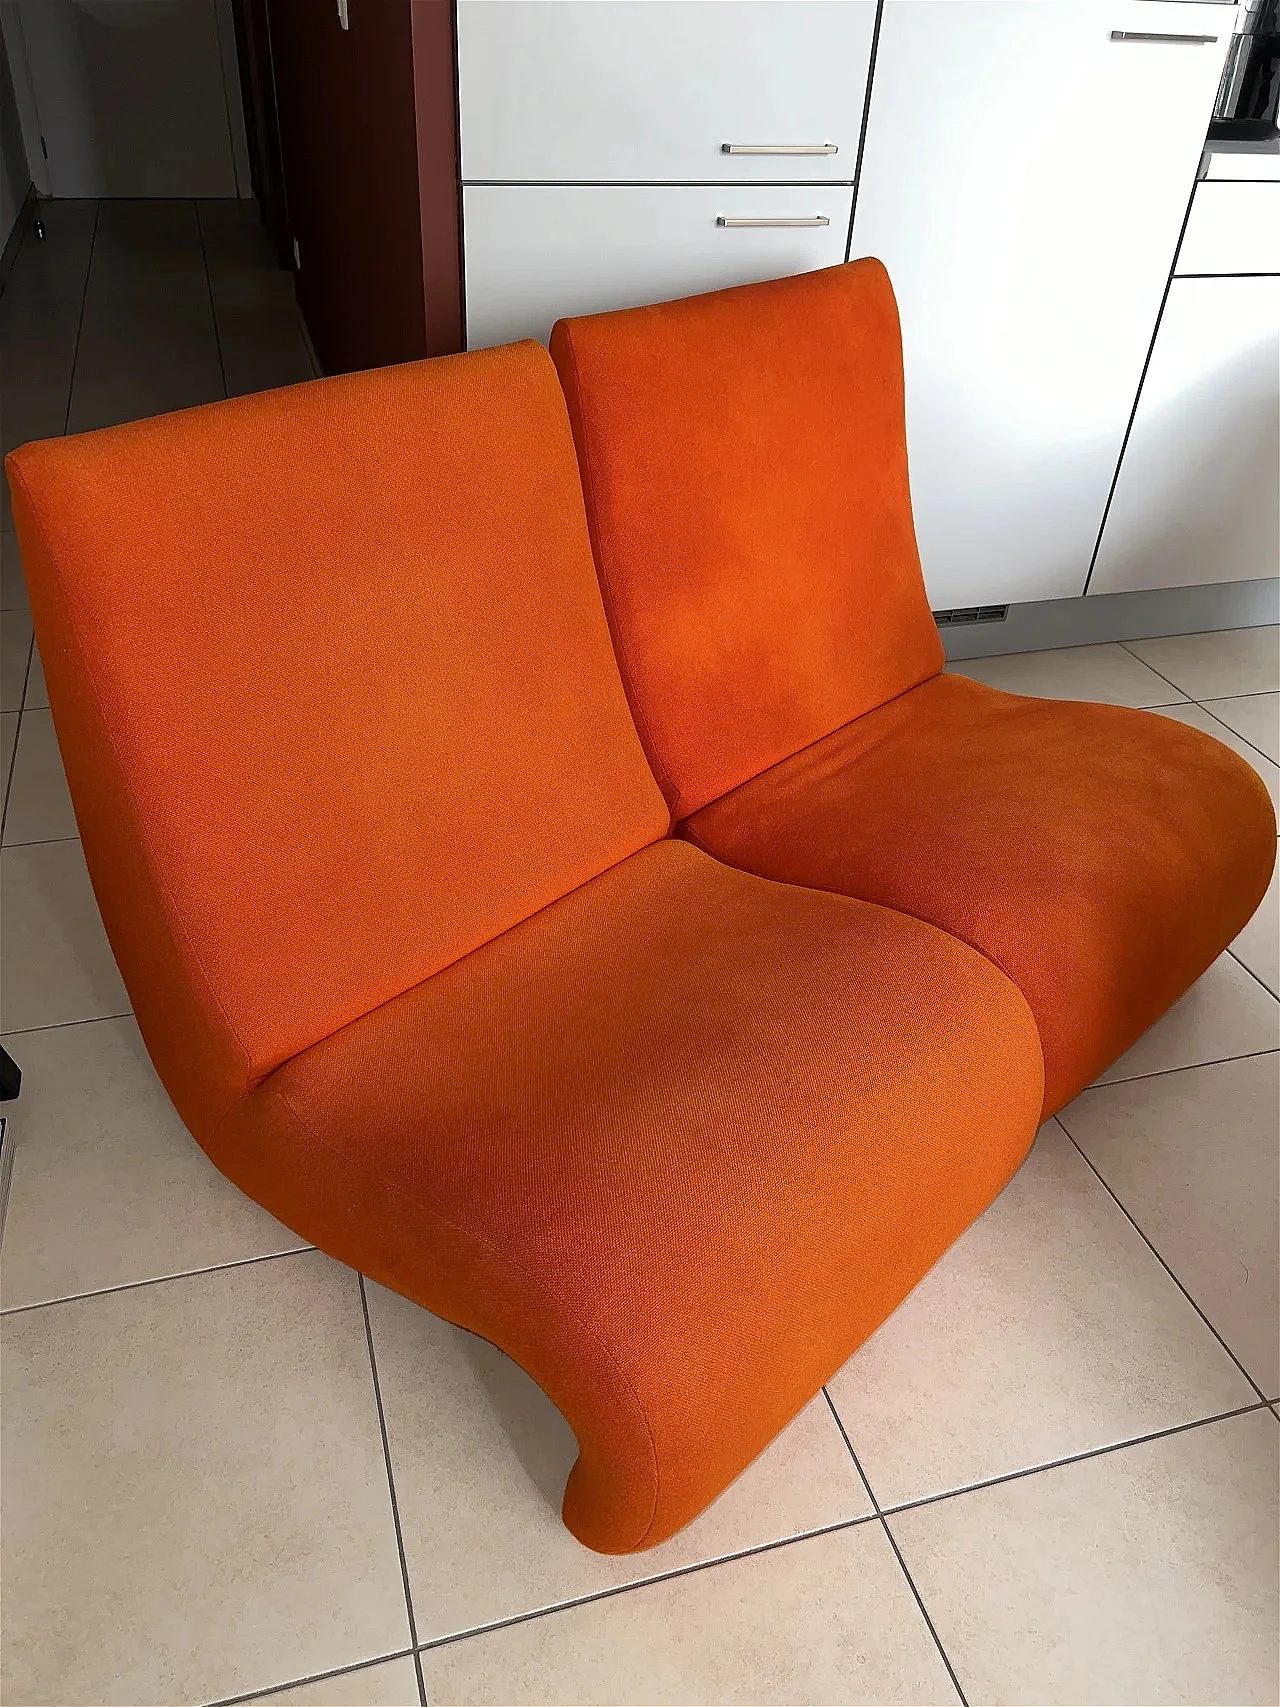 Pair of orange Amoebe armchairs by Verner Panton for Vitra 1